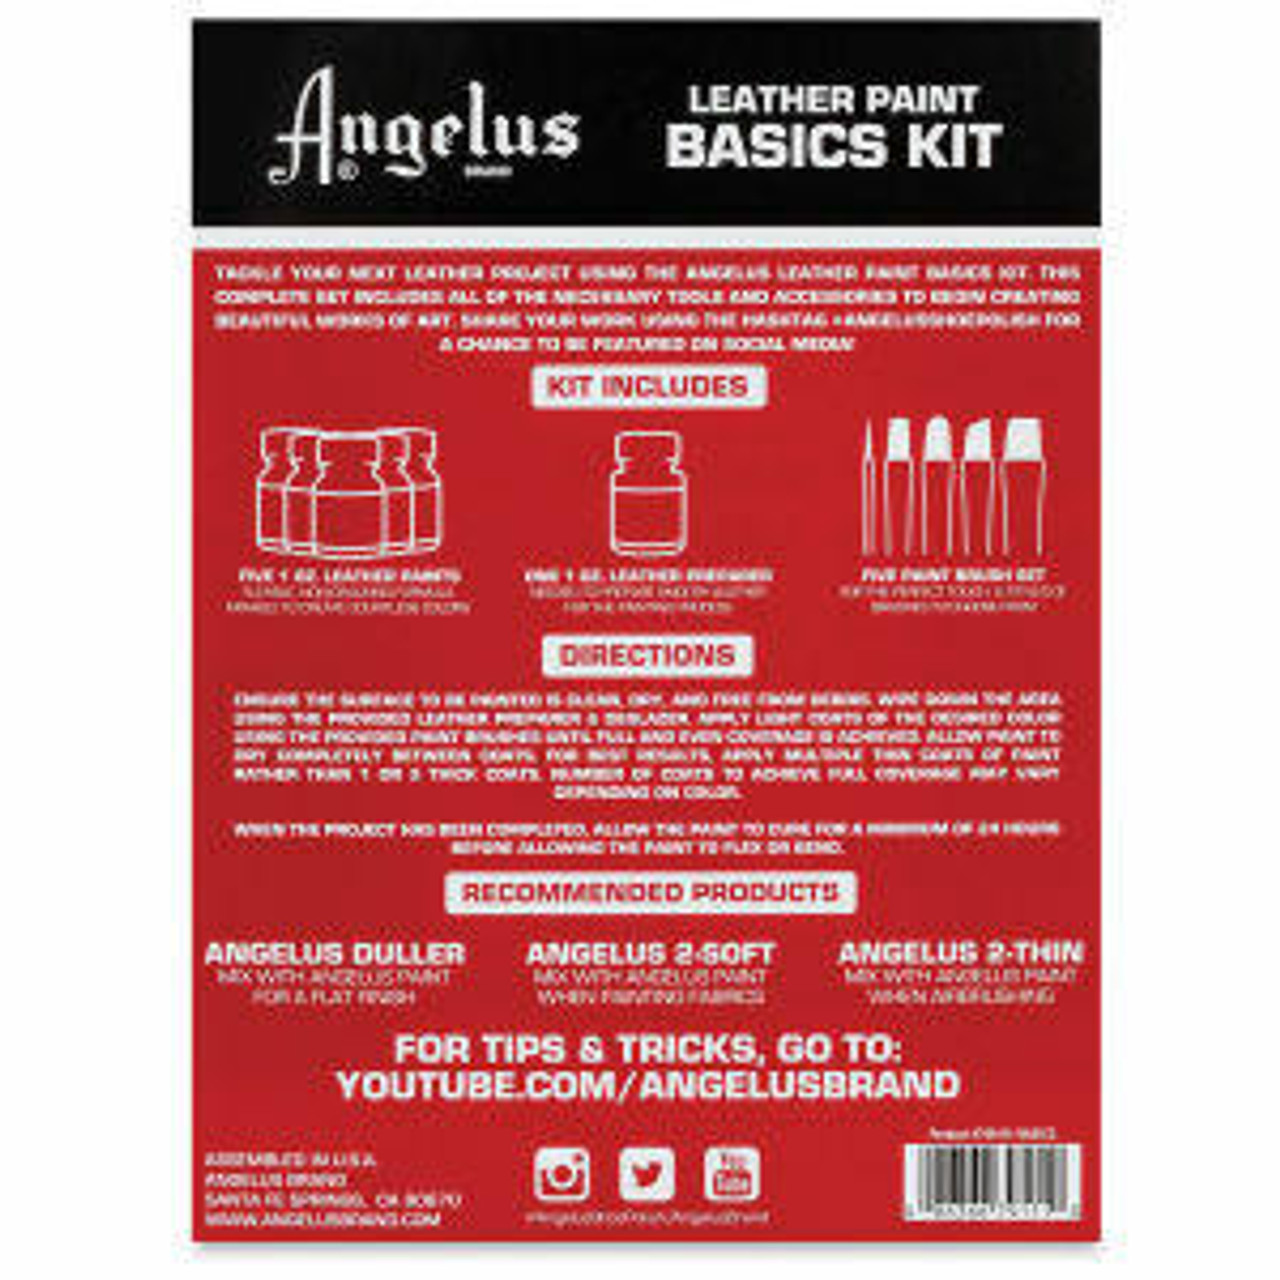 Angelus Acrylic Leather Paint Best Sellers Kit (12 Colors / 1 oz) - Shoe &  Boot Accessories 4 U